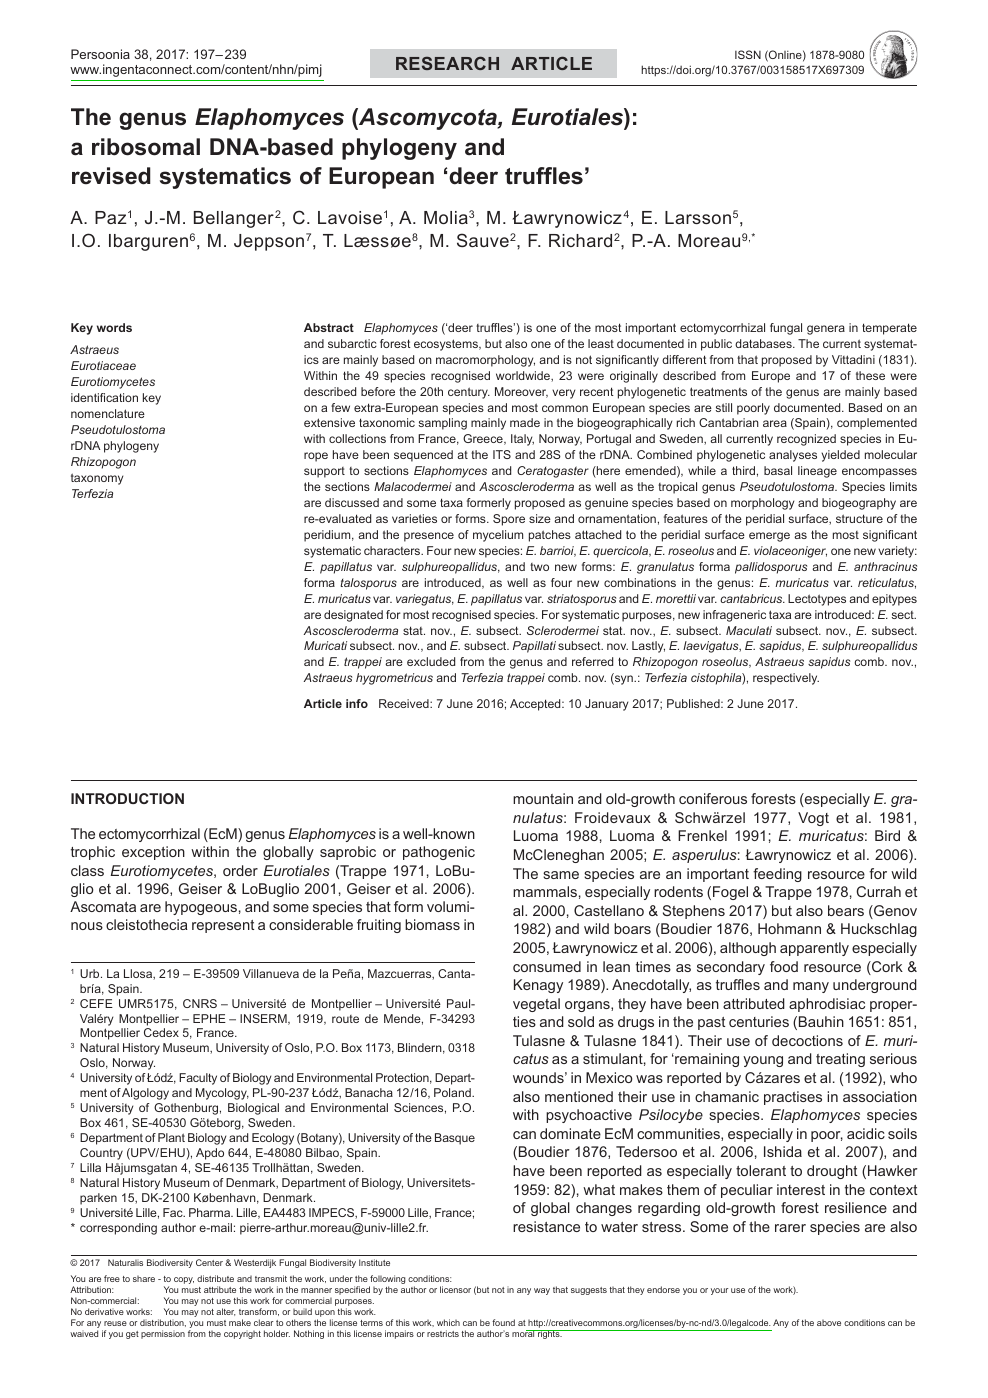 The Genus Elaphomyces Ascomycota Eurotiales A Ribosomal Dna